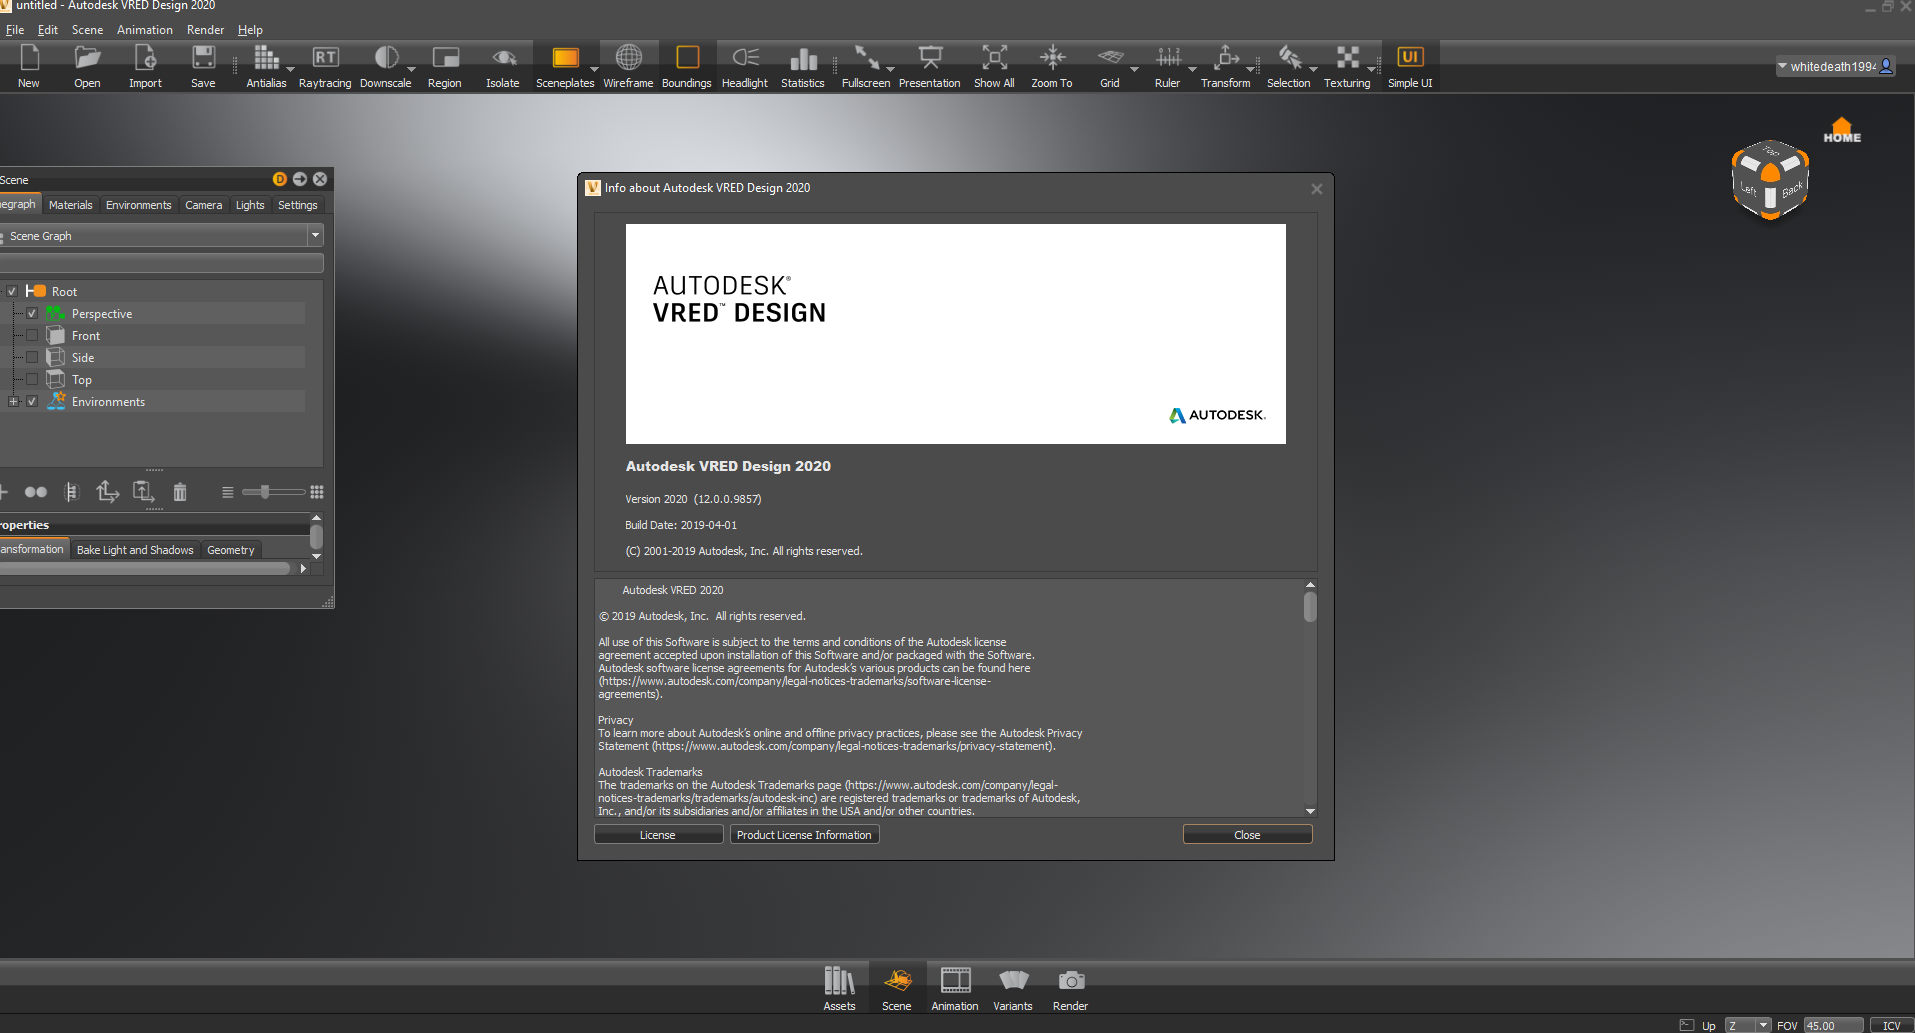 Autodesk VRED Design 2020 (x64)